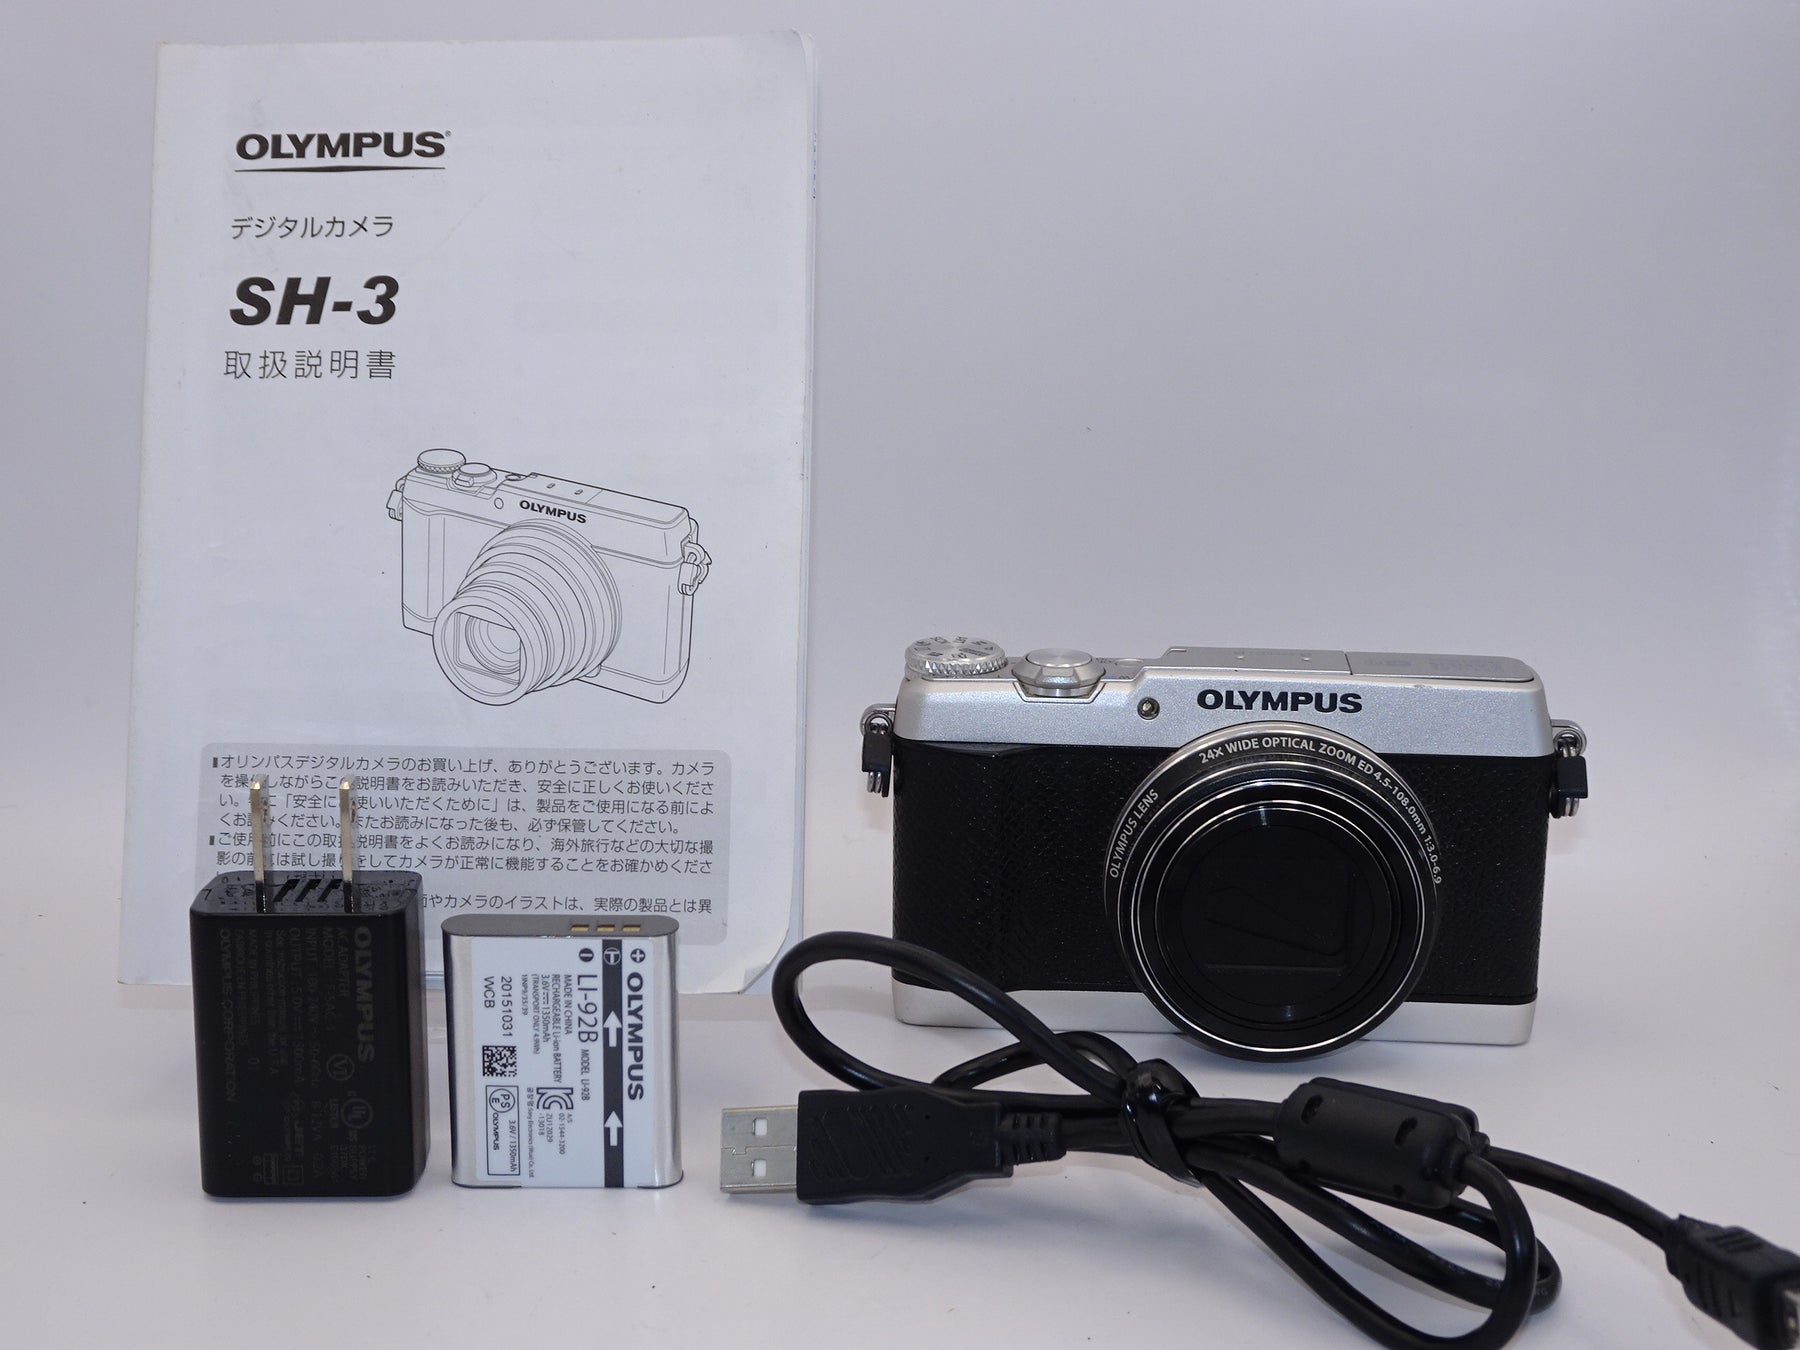 OLYMPUS コンパクトデジタルカメラ STYLUS SH-3 - デジタルカメラ